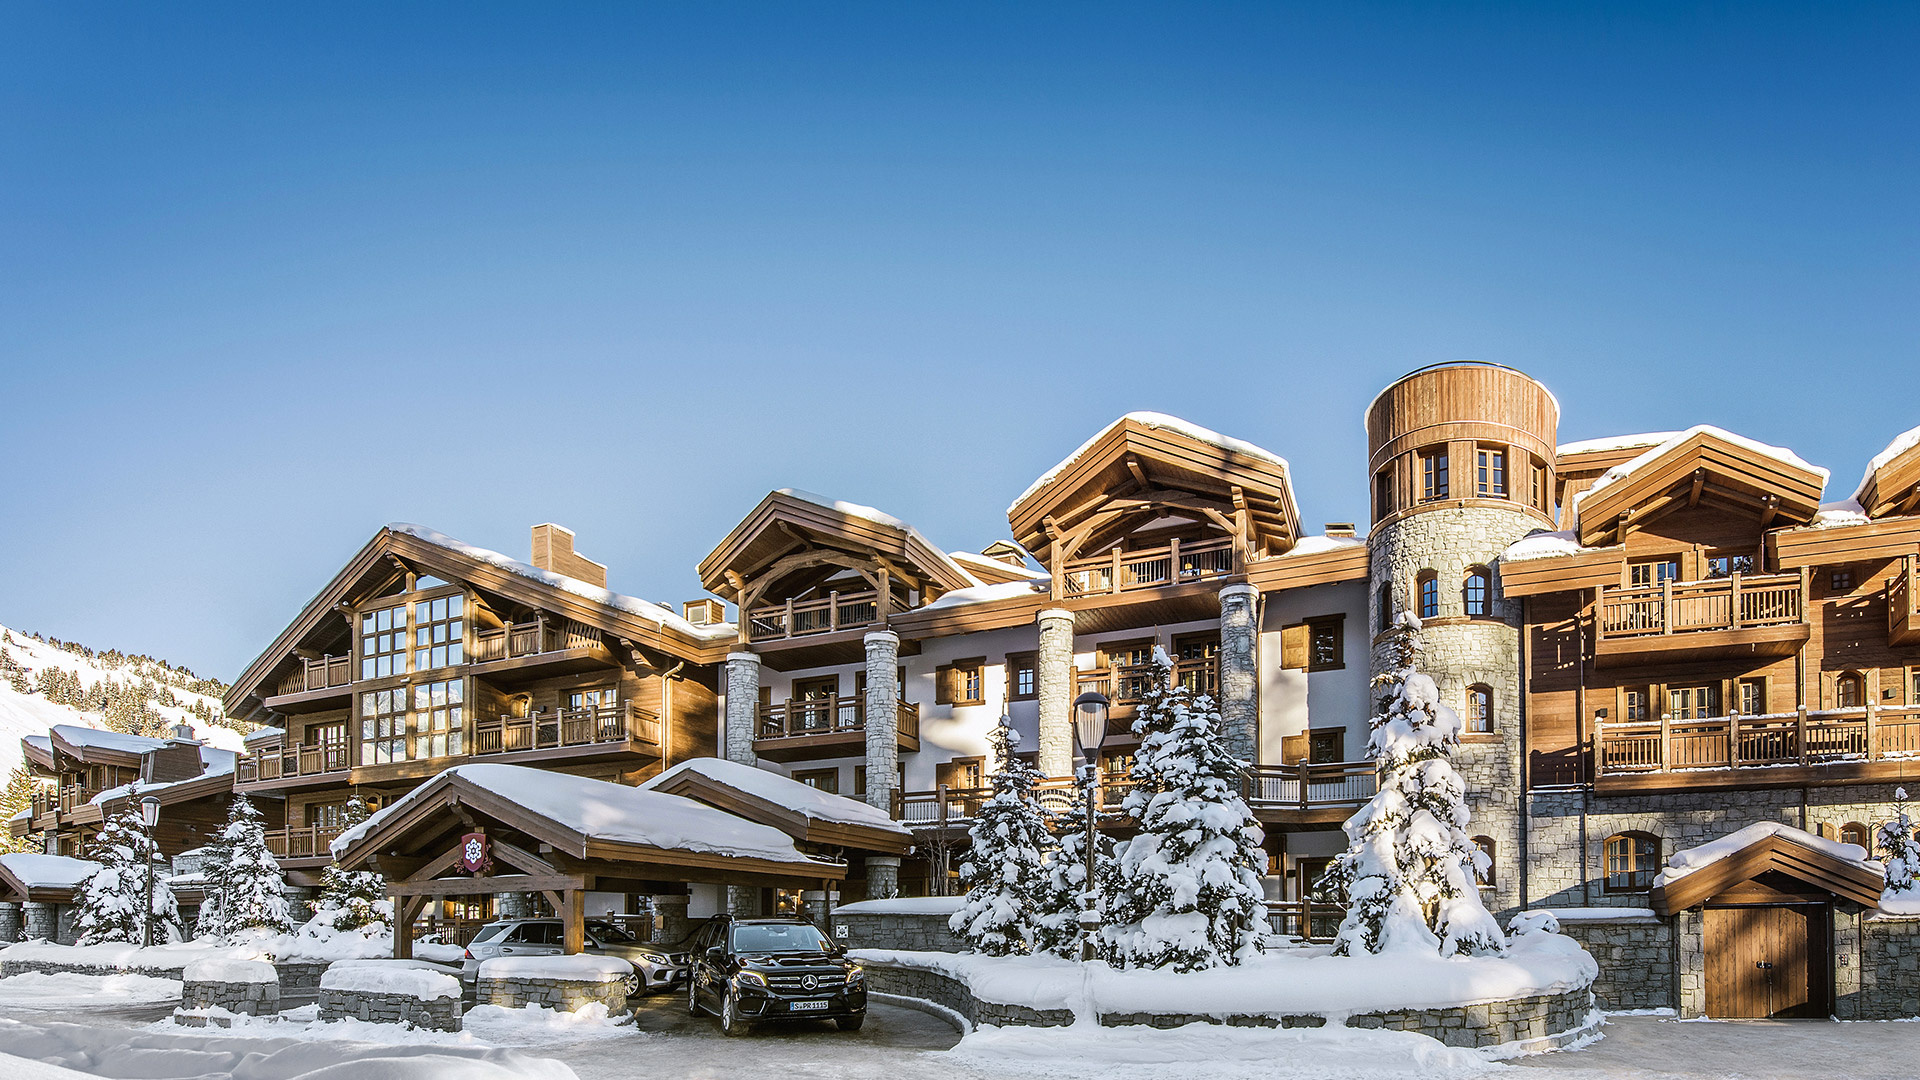 Courchevel luxury hotel, Alpine chalets, French ski resort, Lap of luxury, 1920x1080 Full HD Desktop